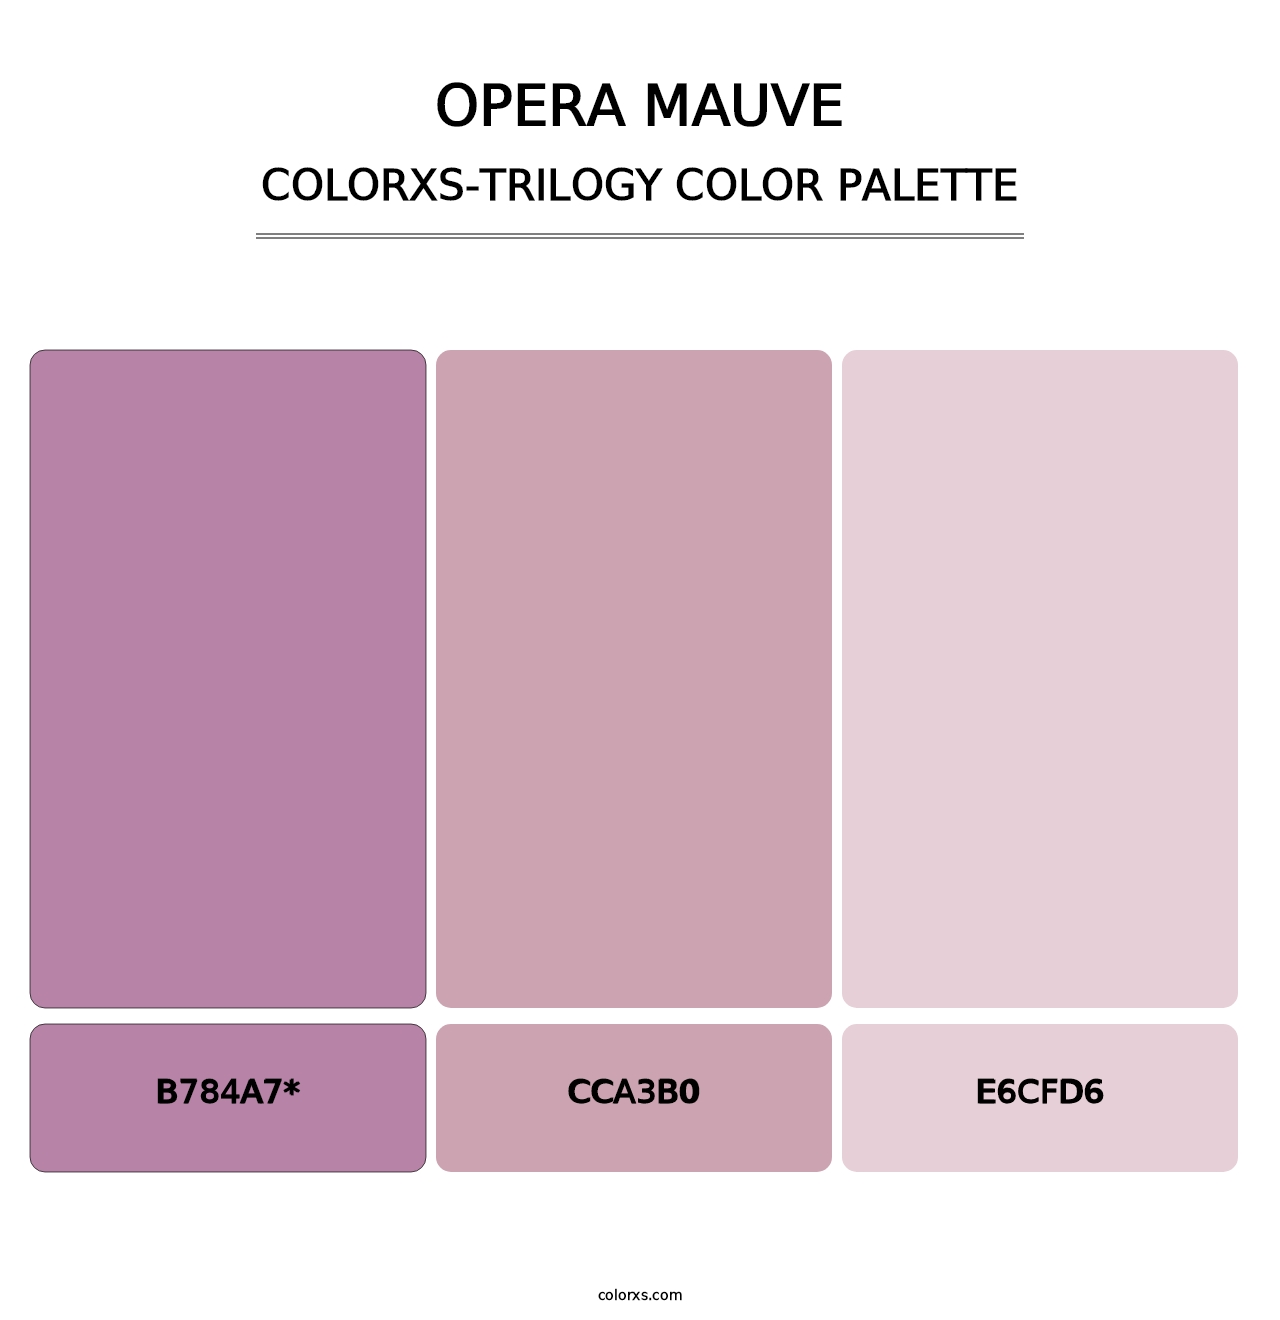 Opera Mauve - Colorxs Trilogy Palette